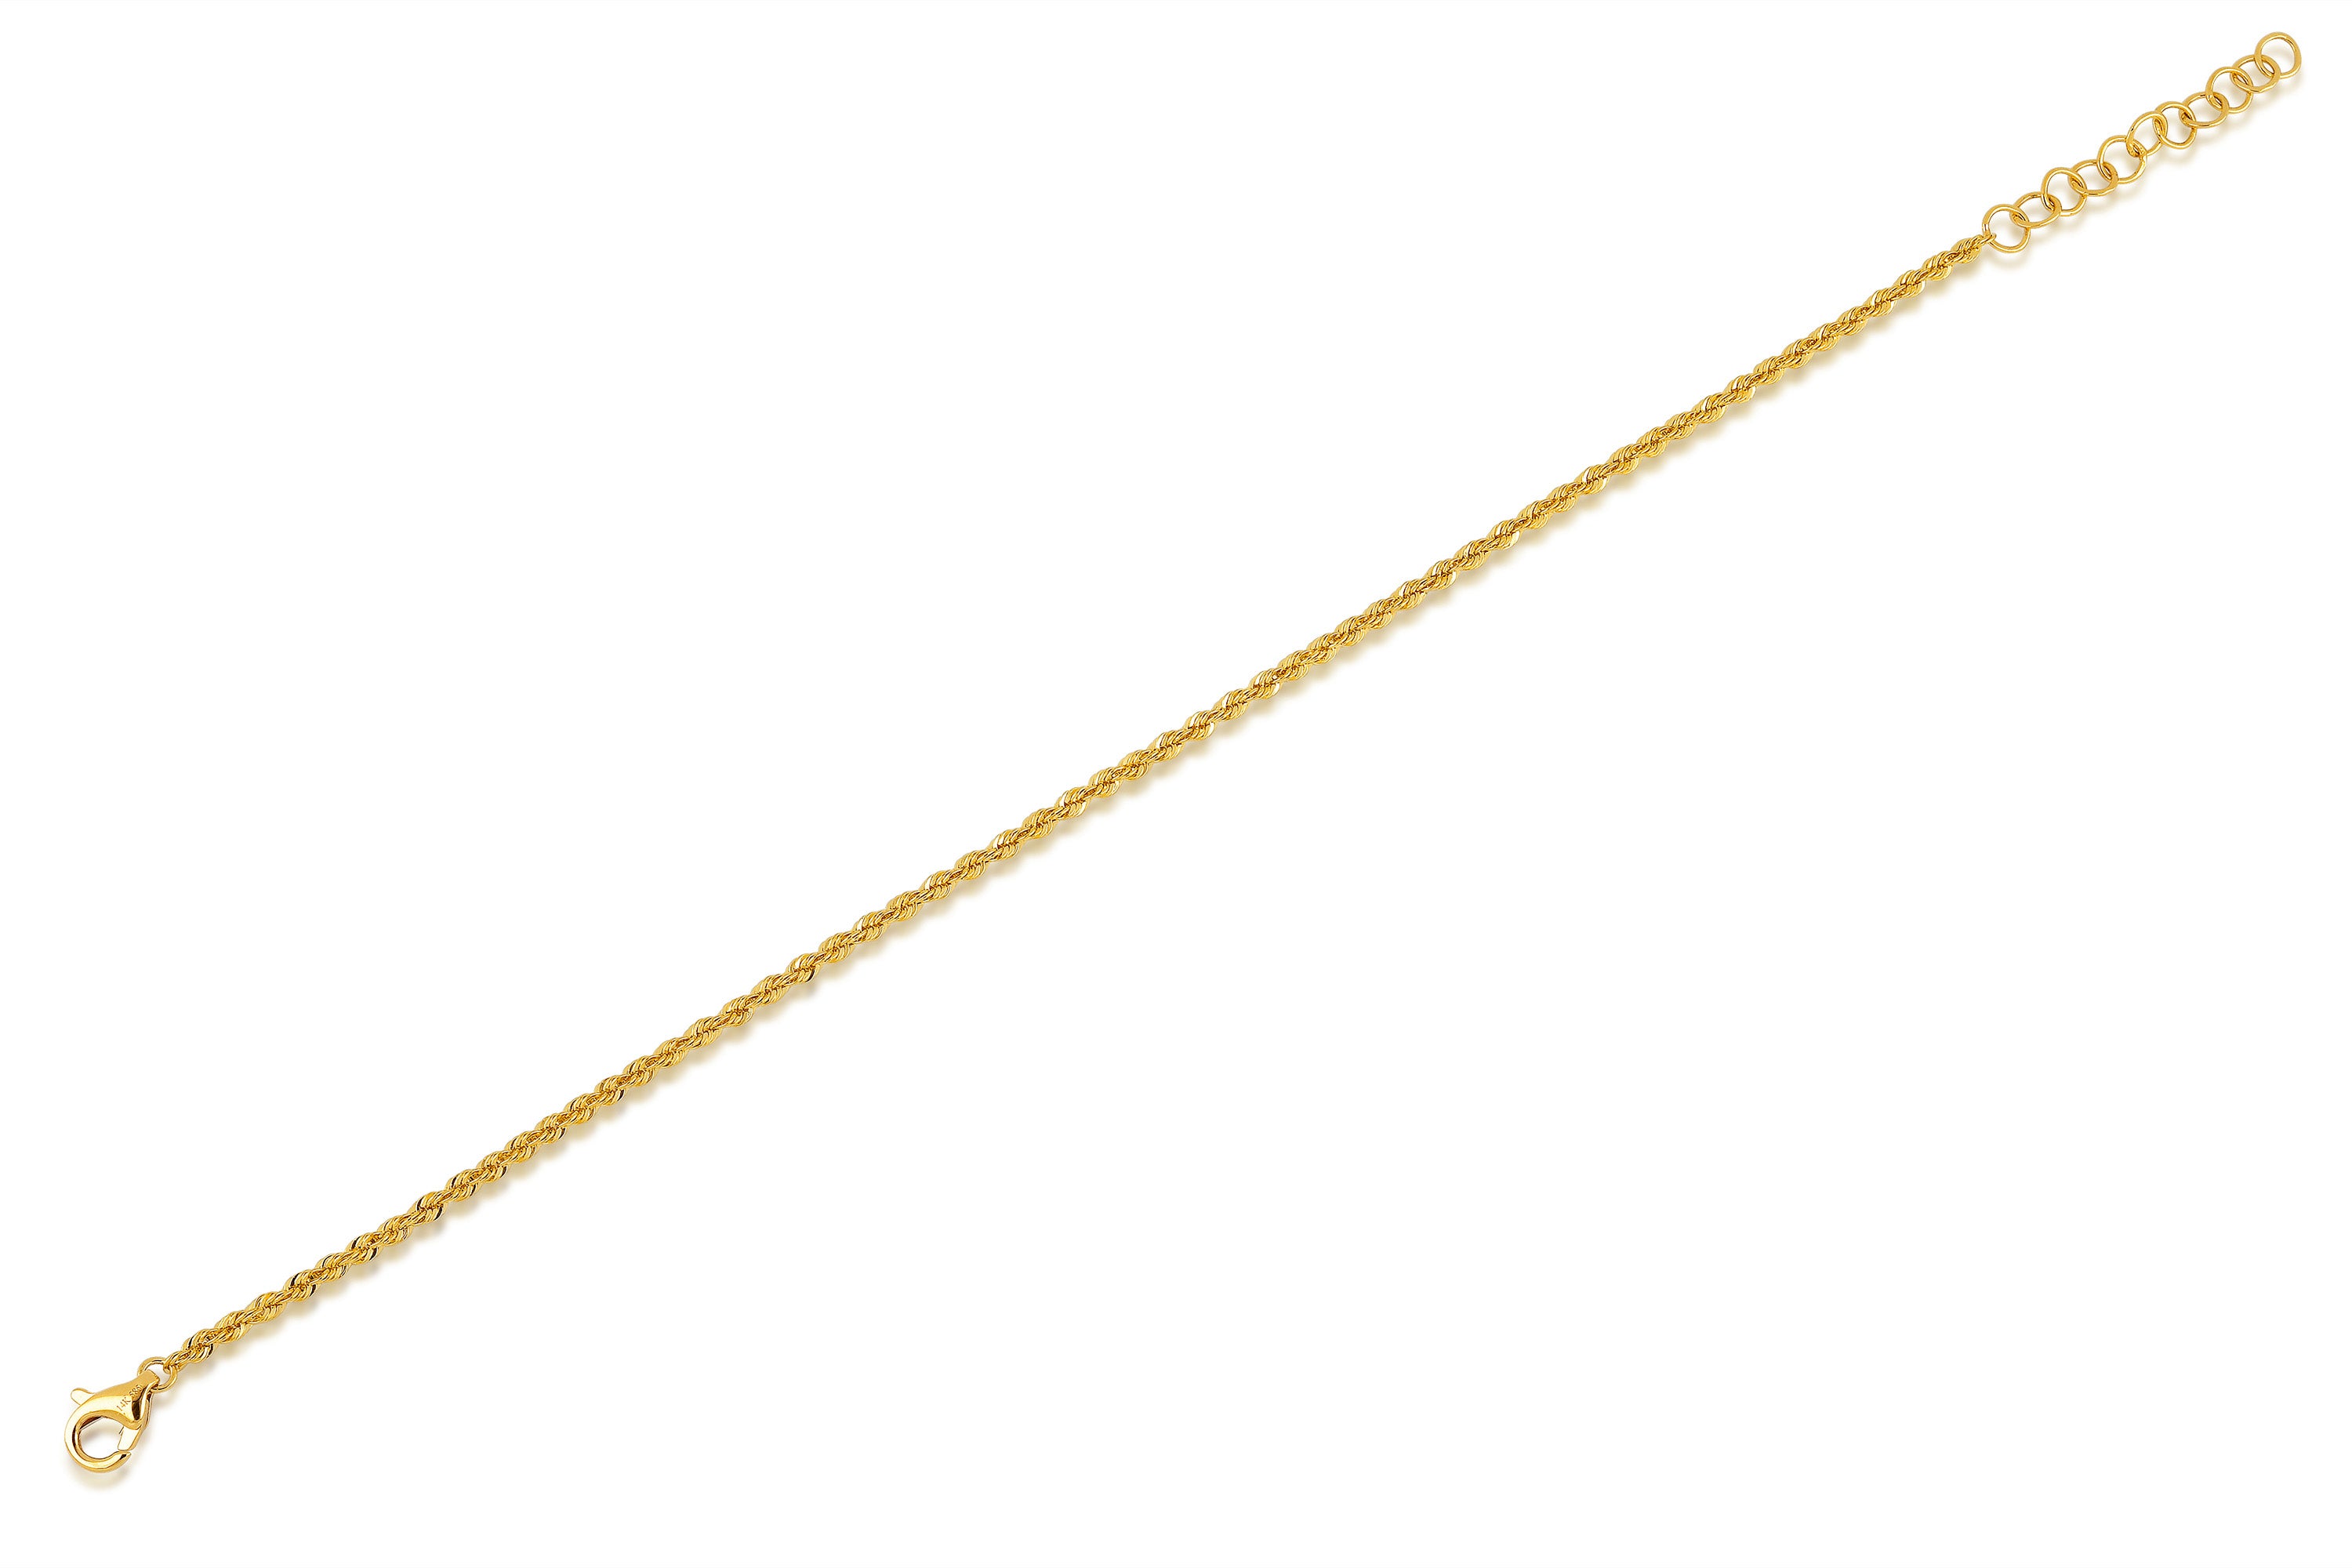 14K Gold Twisted Chain Bracelet